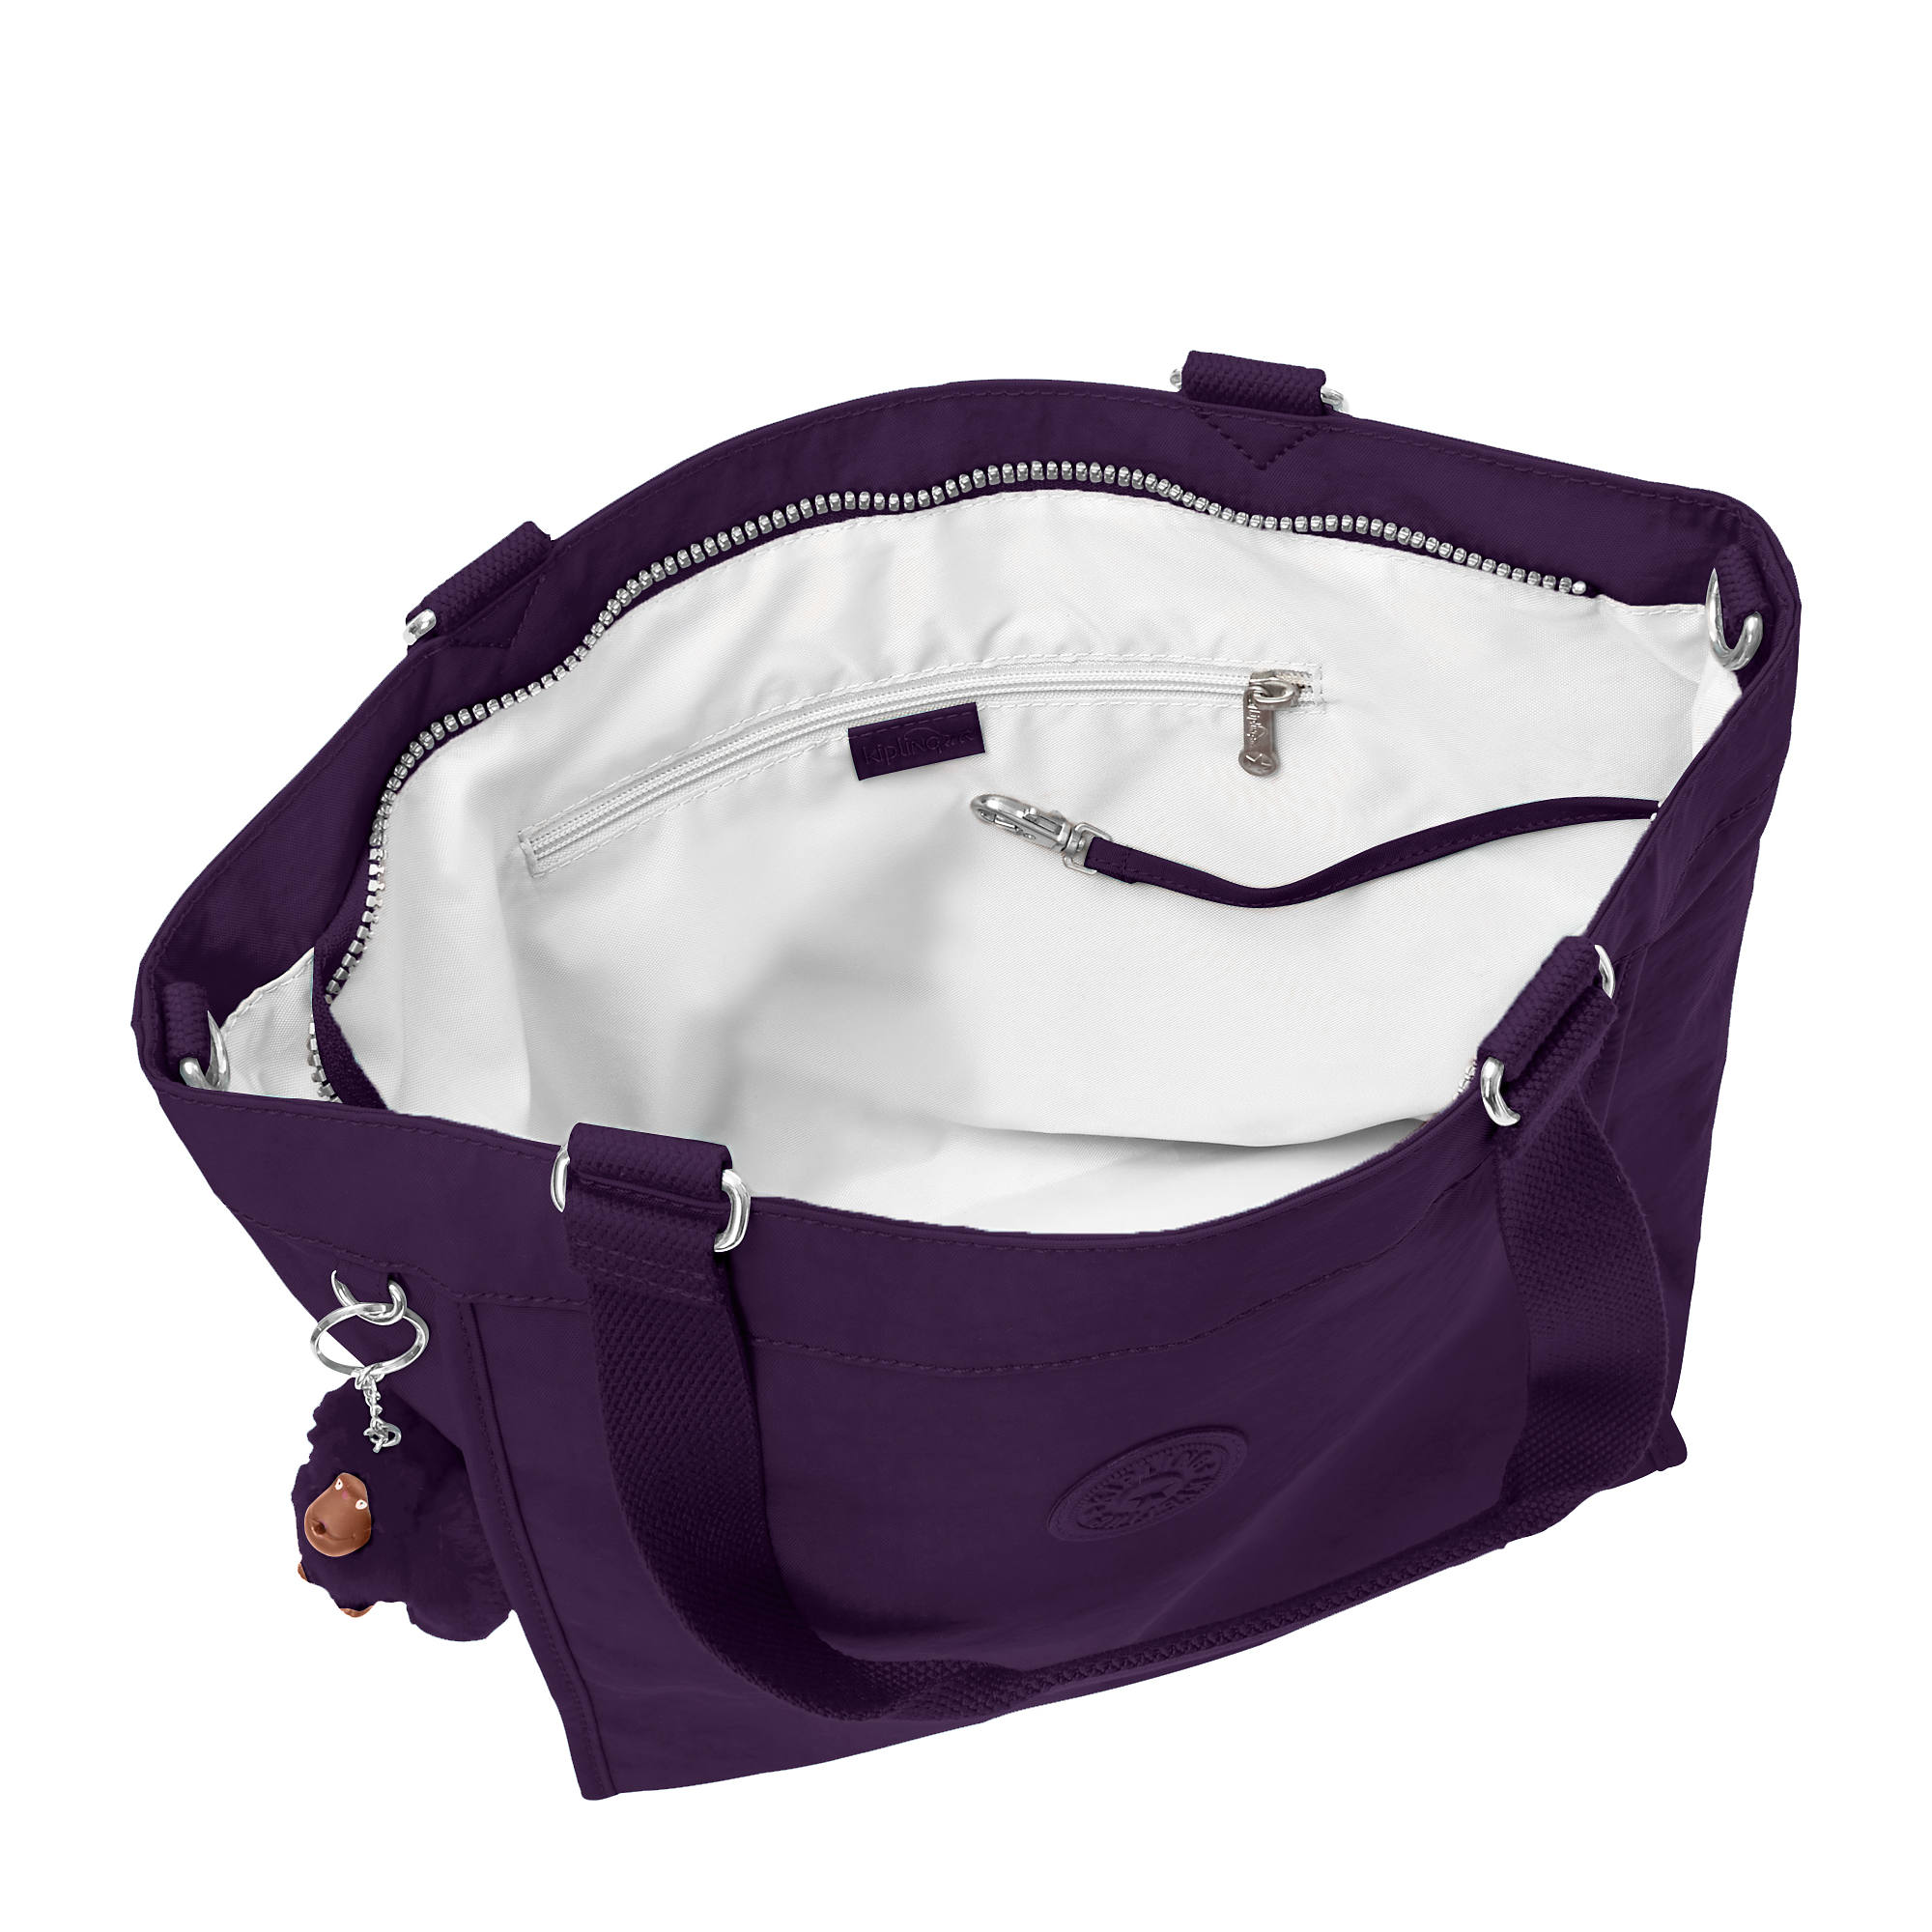 Kipling New Shopper Small Tote Bag | eBay